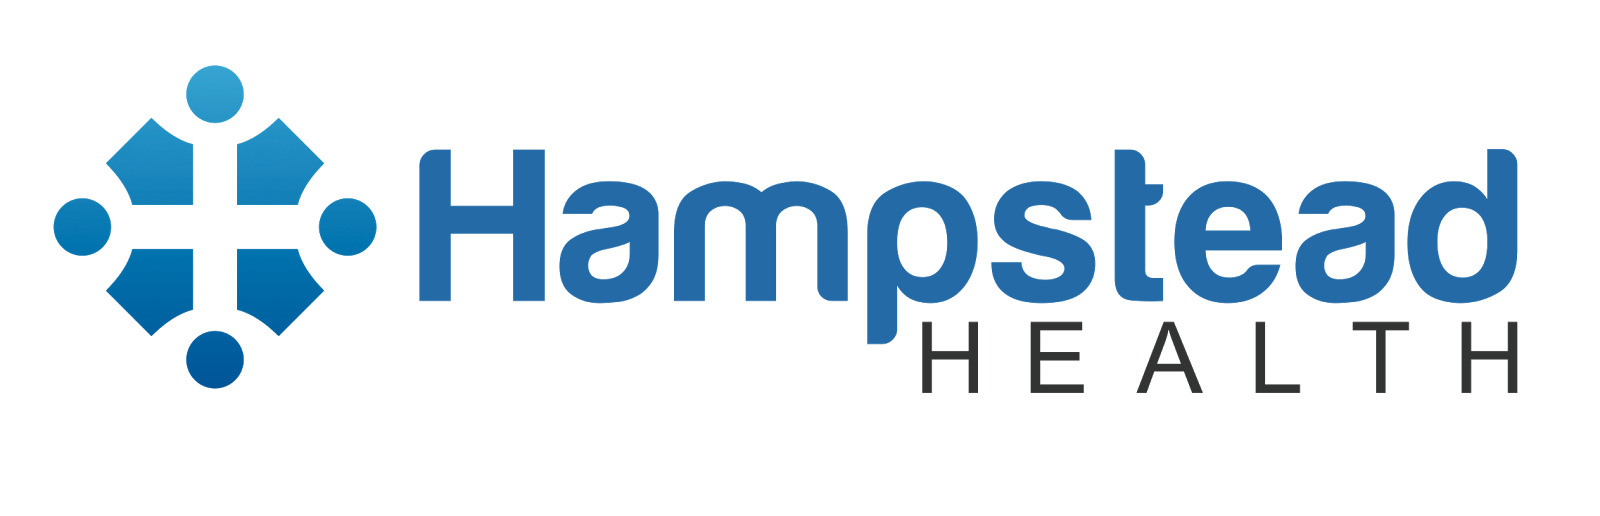 Hampstead Health